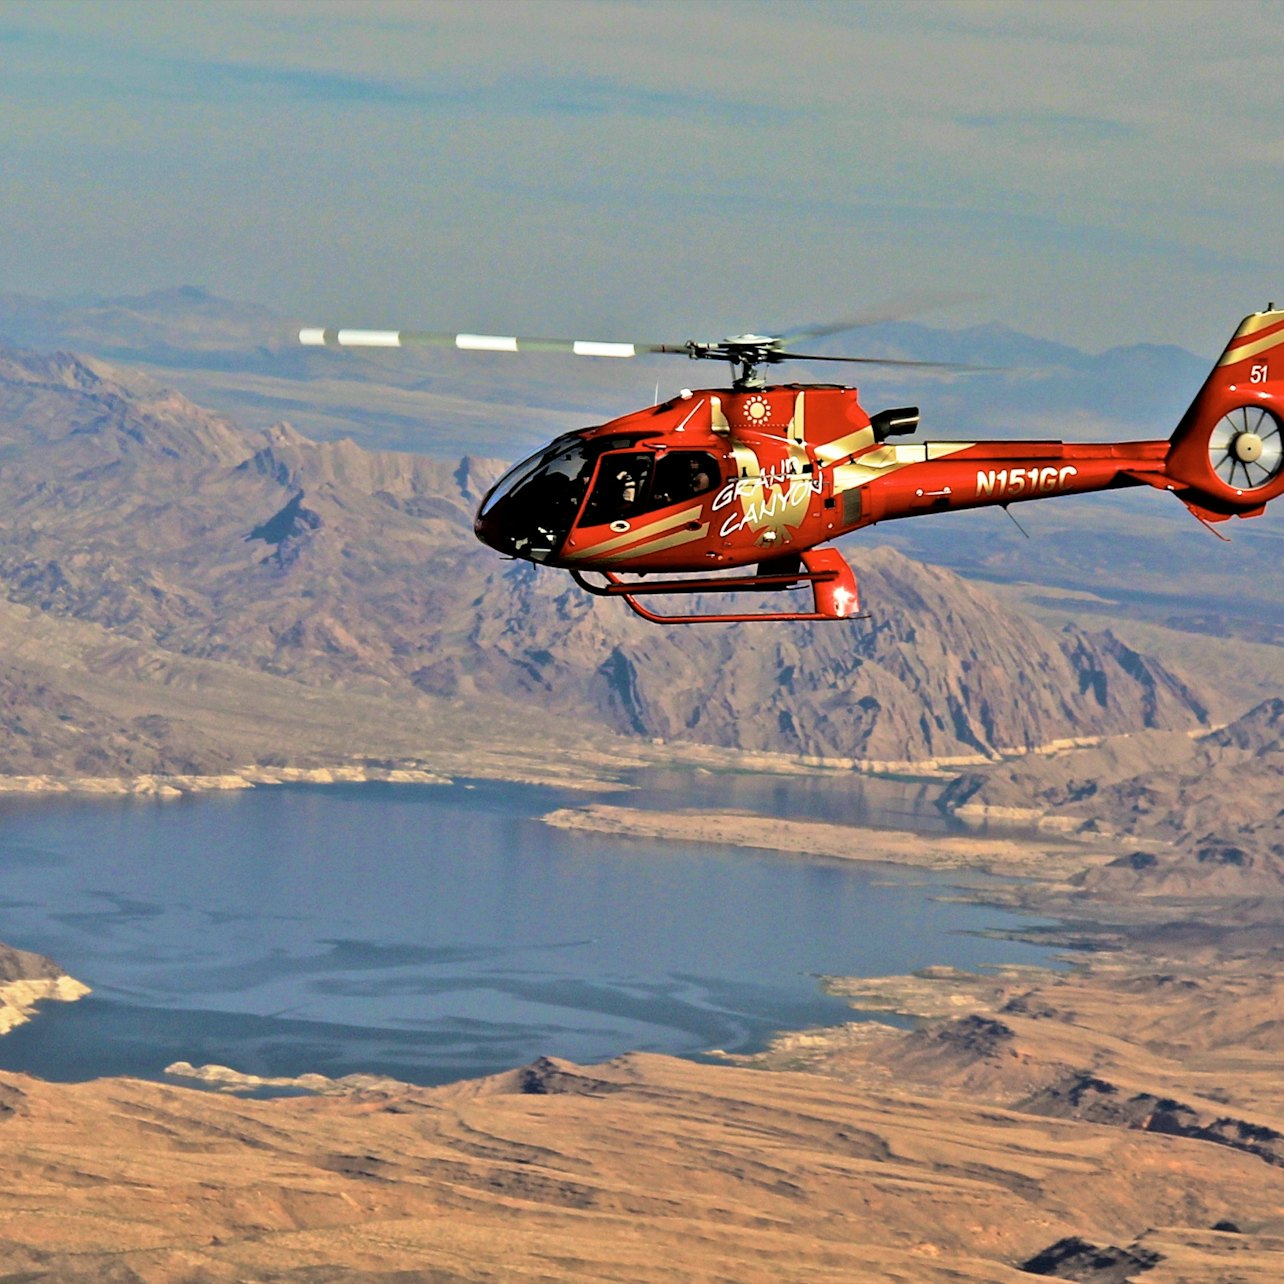 Tour aereo Golden Eagle del Grand Canyon West Rim - Alloggi in Las Vegas, Nevada